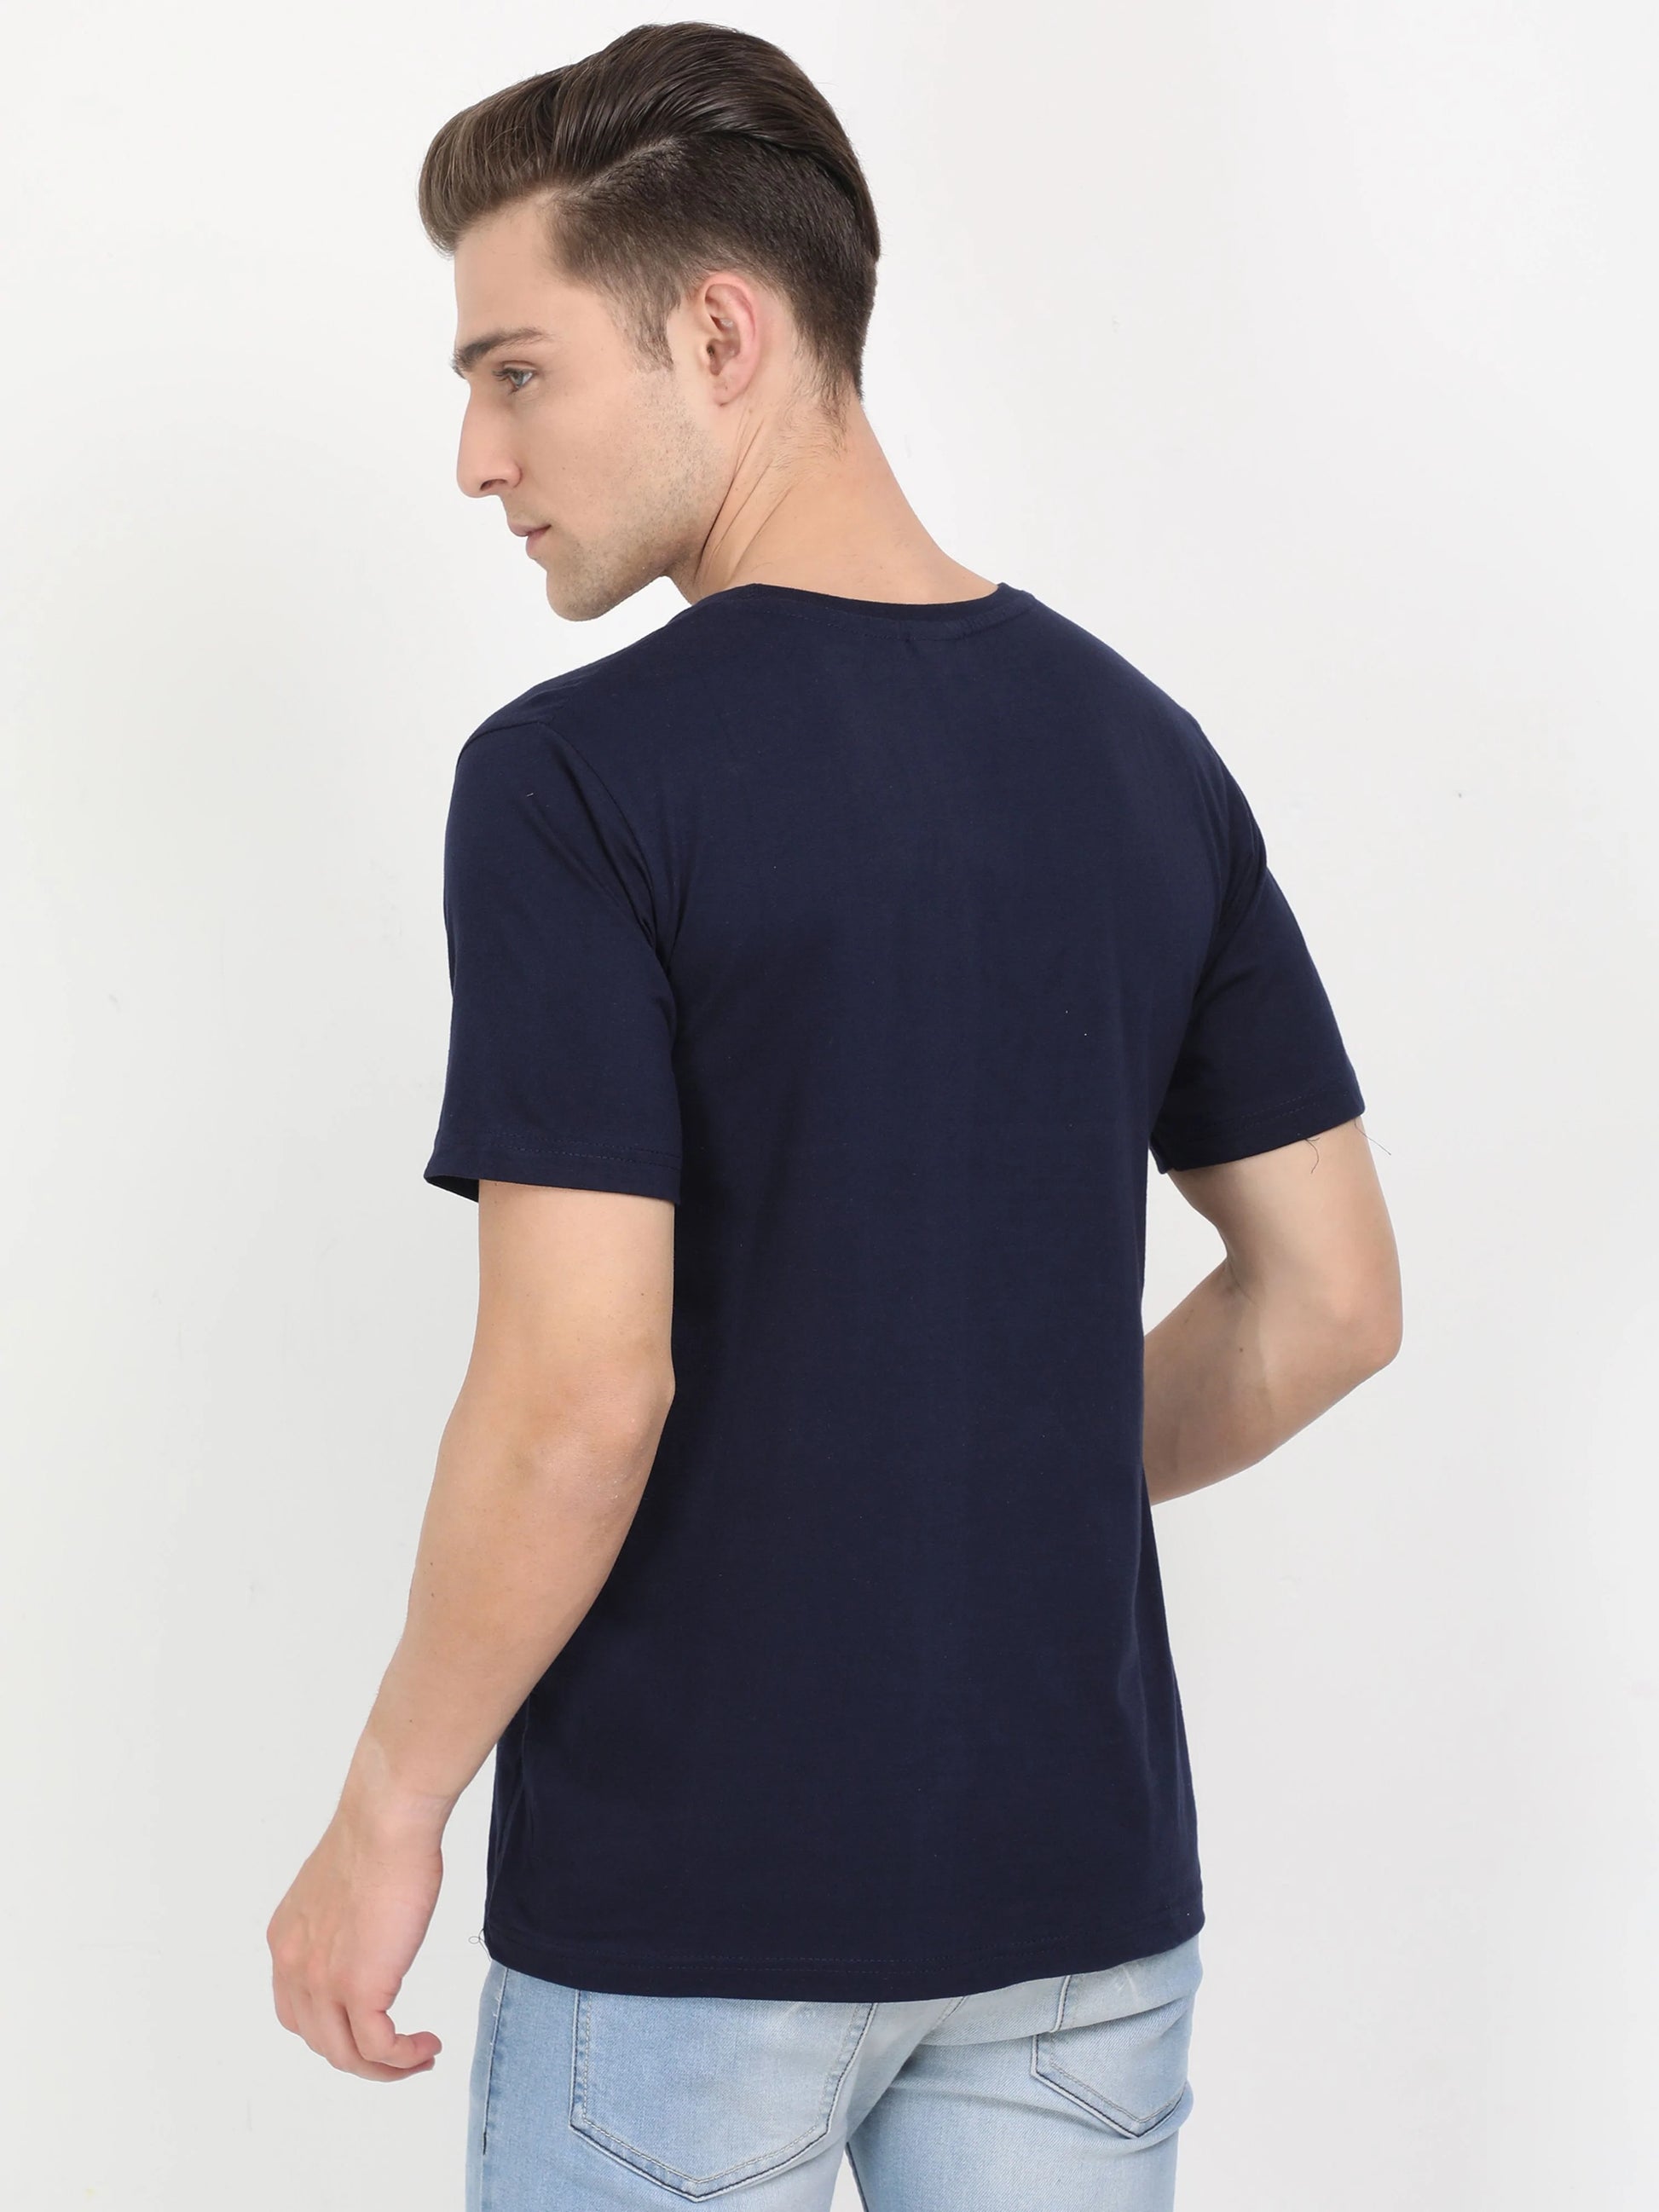 Fleximaa Men's Cotton Plain Round Neck Half Sleeve T-Shirt (Pack of 2) - fleximaa-so